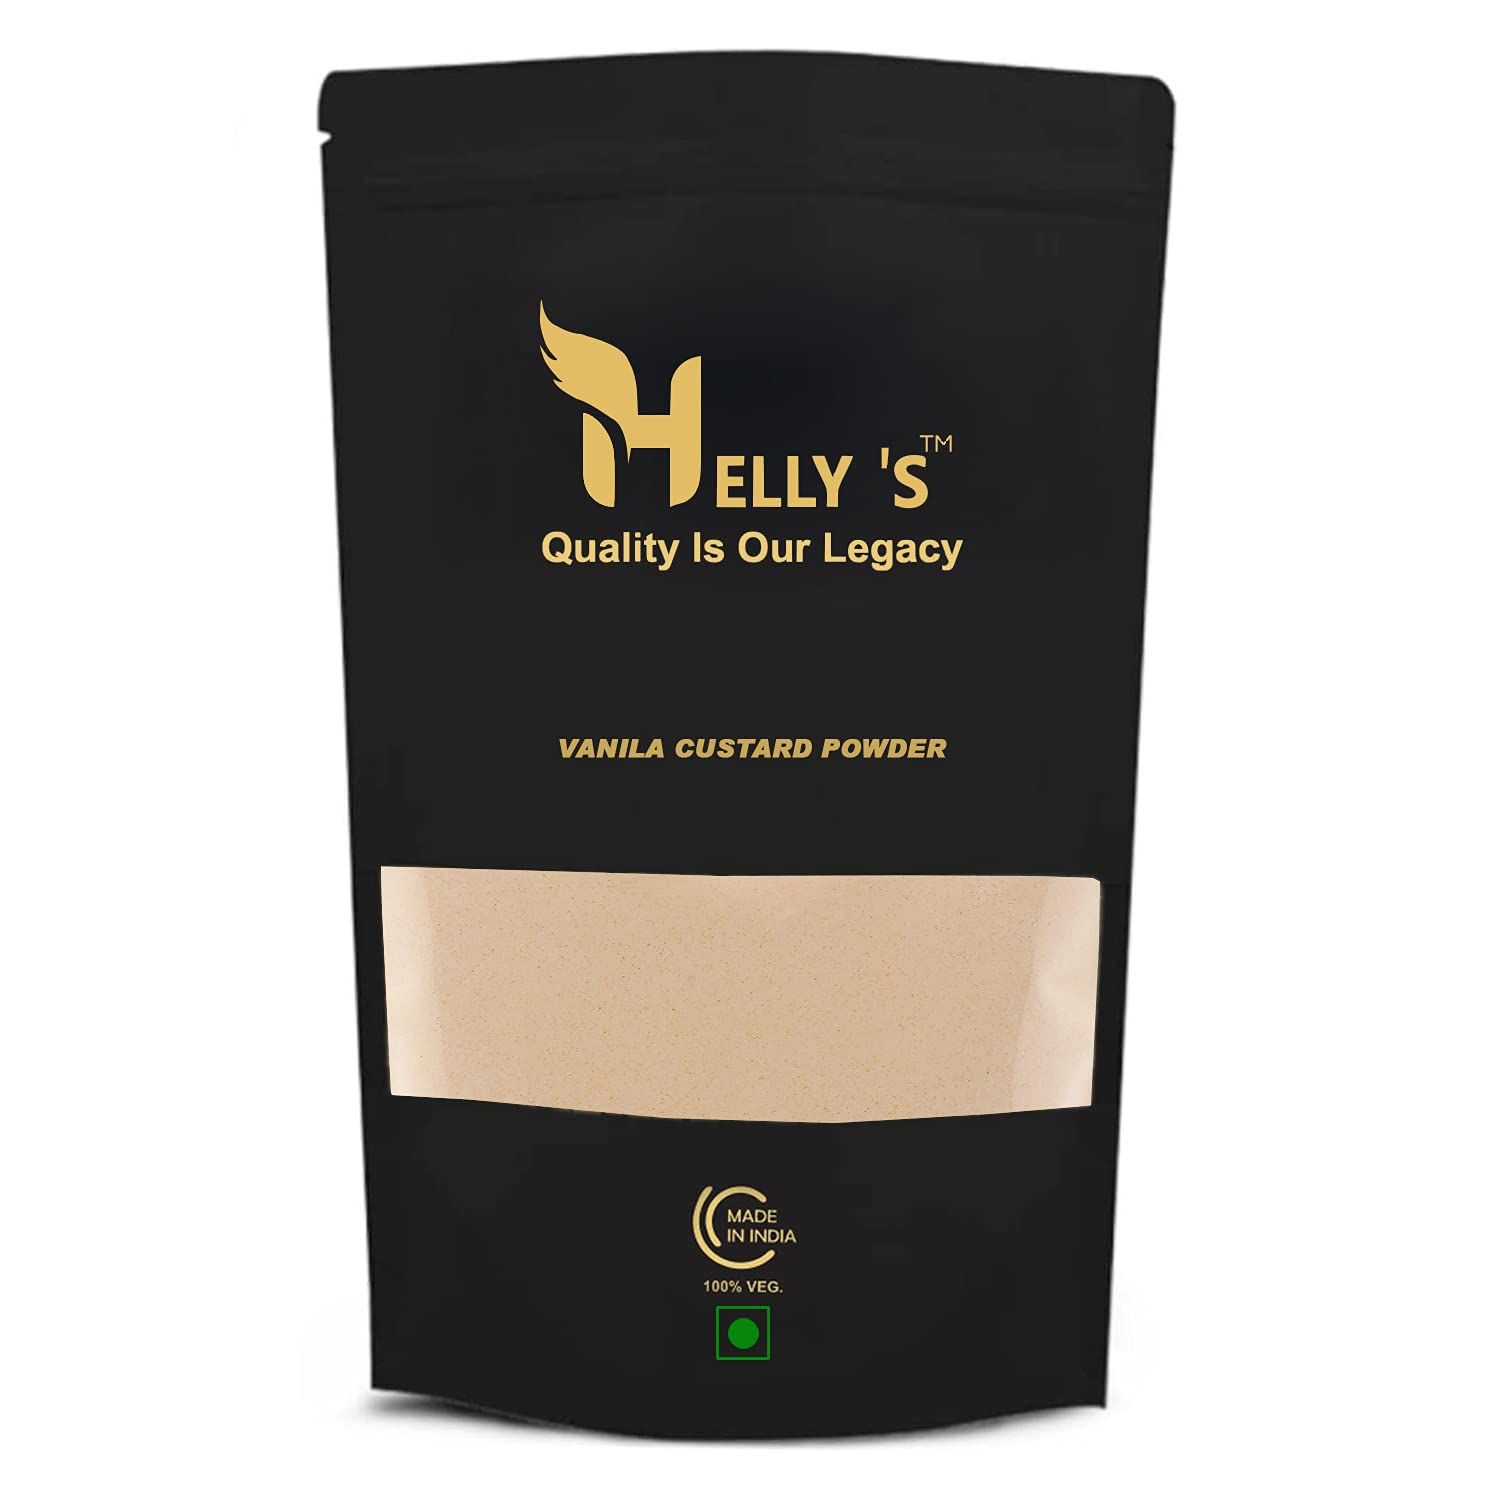 Heely's Eggless Custard Powder Vanilla Flavour Image